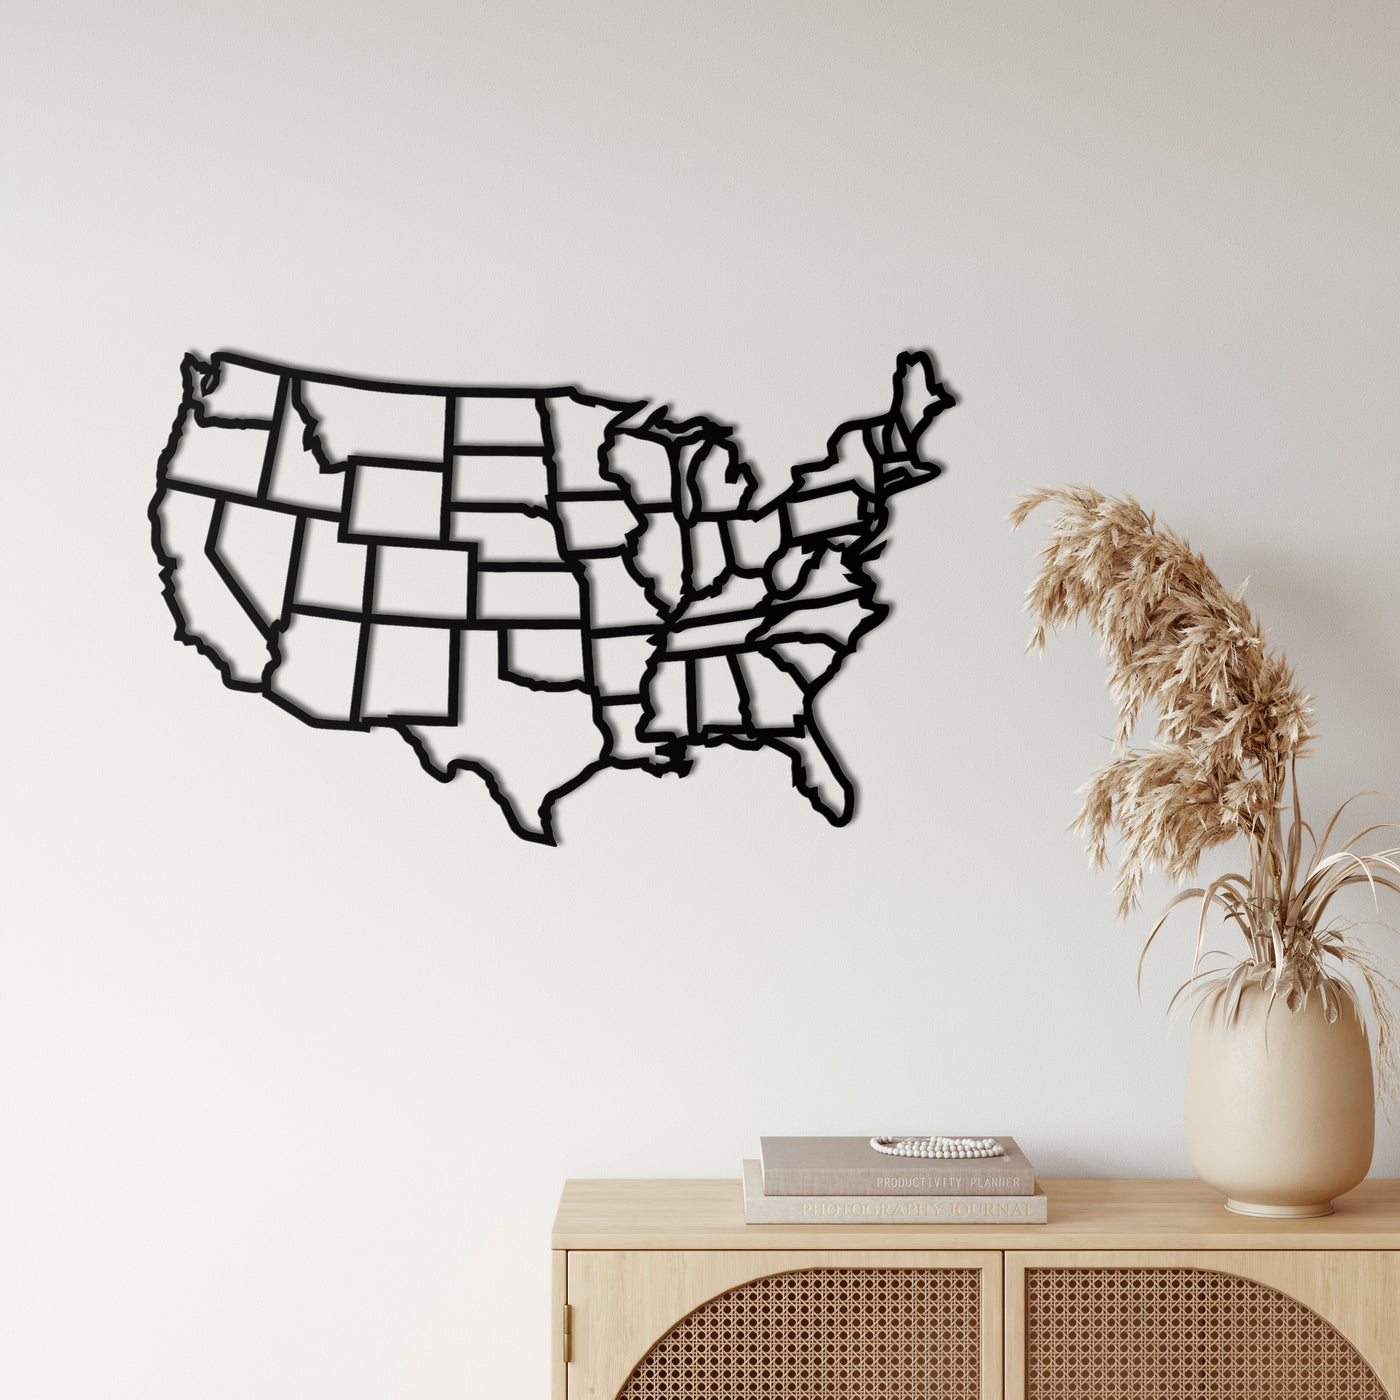 States of America Map Metal Wall Art